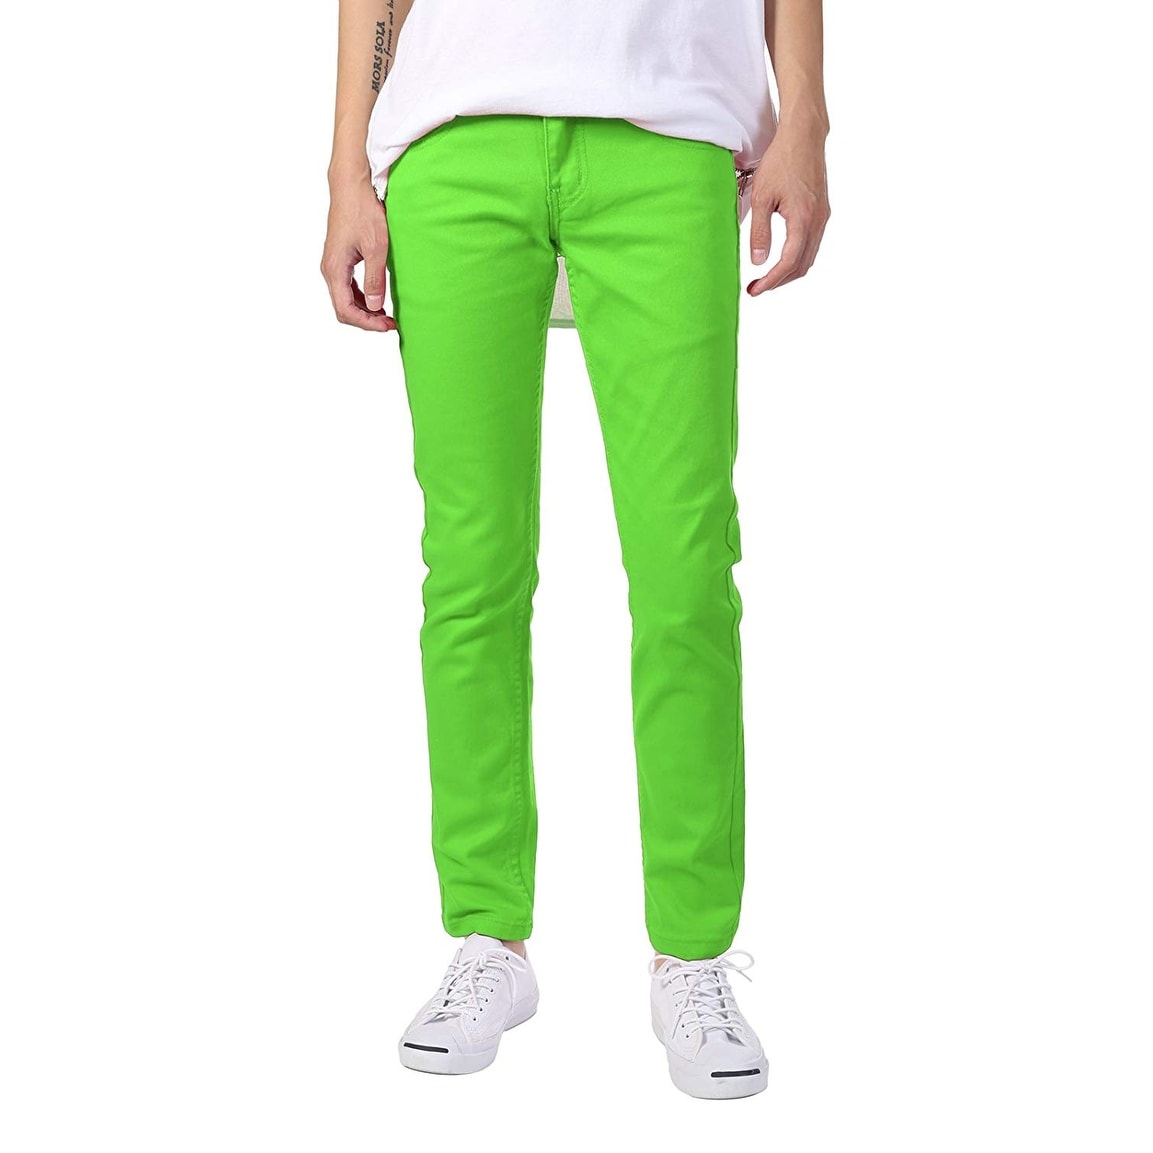 skinny green pants